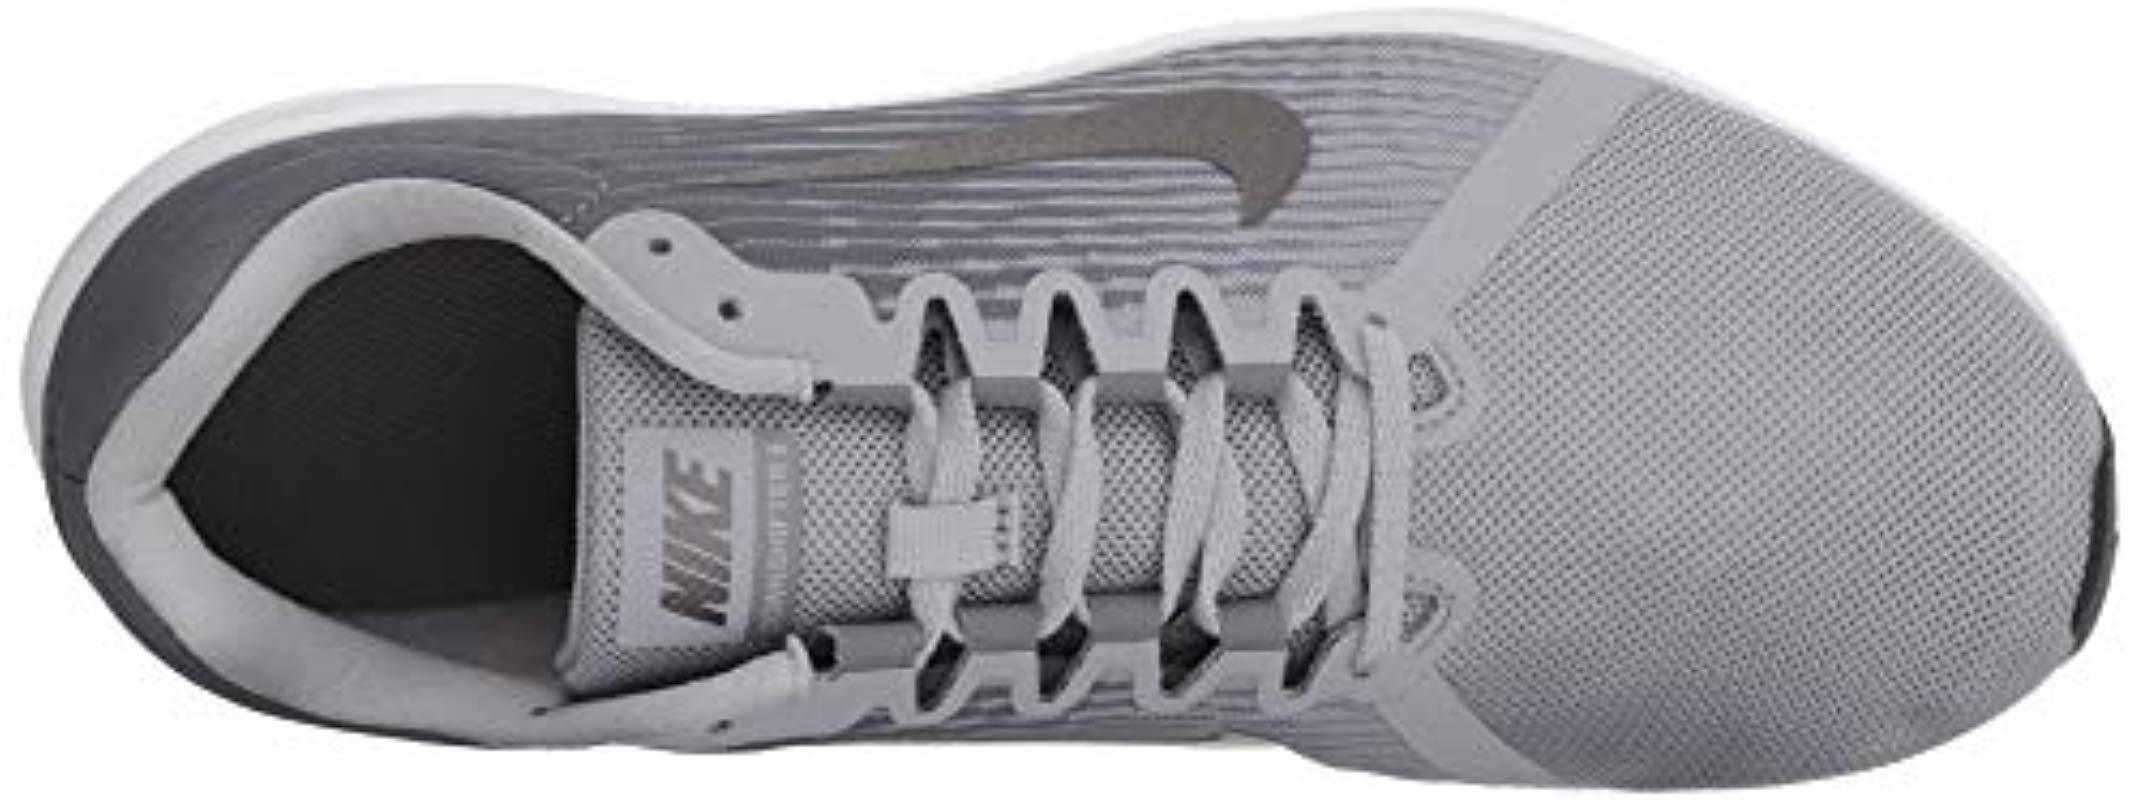 Nike Downshifter 8 Running Shoe in Gray for Men - Lyst